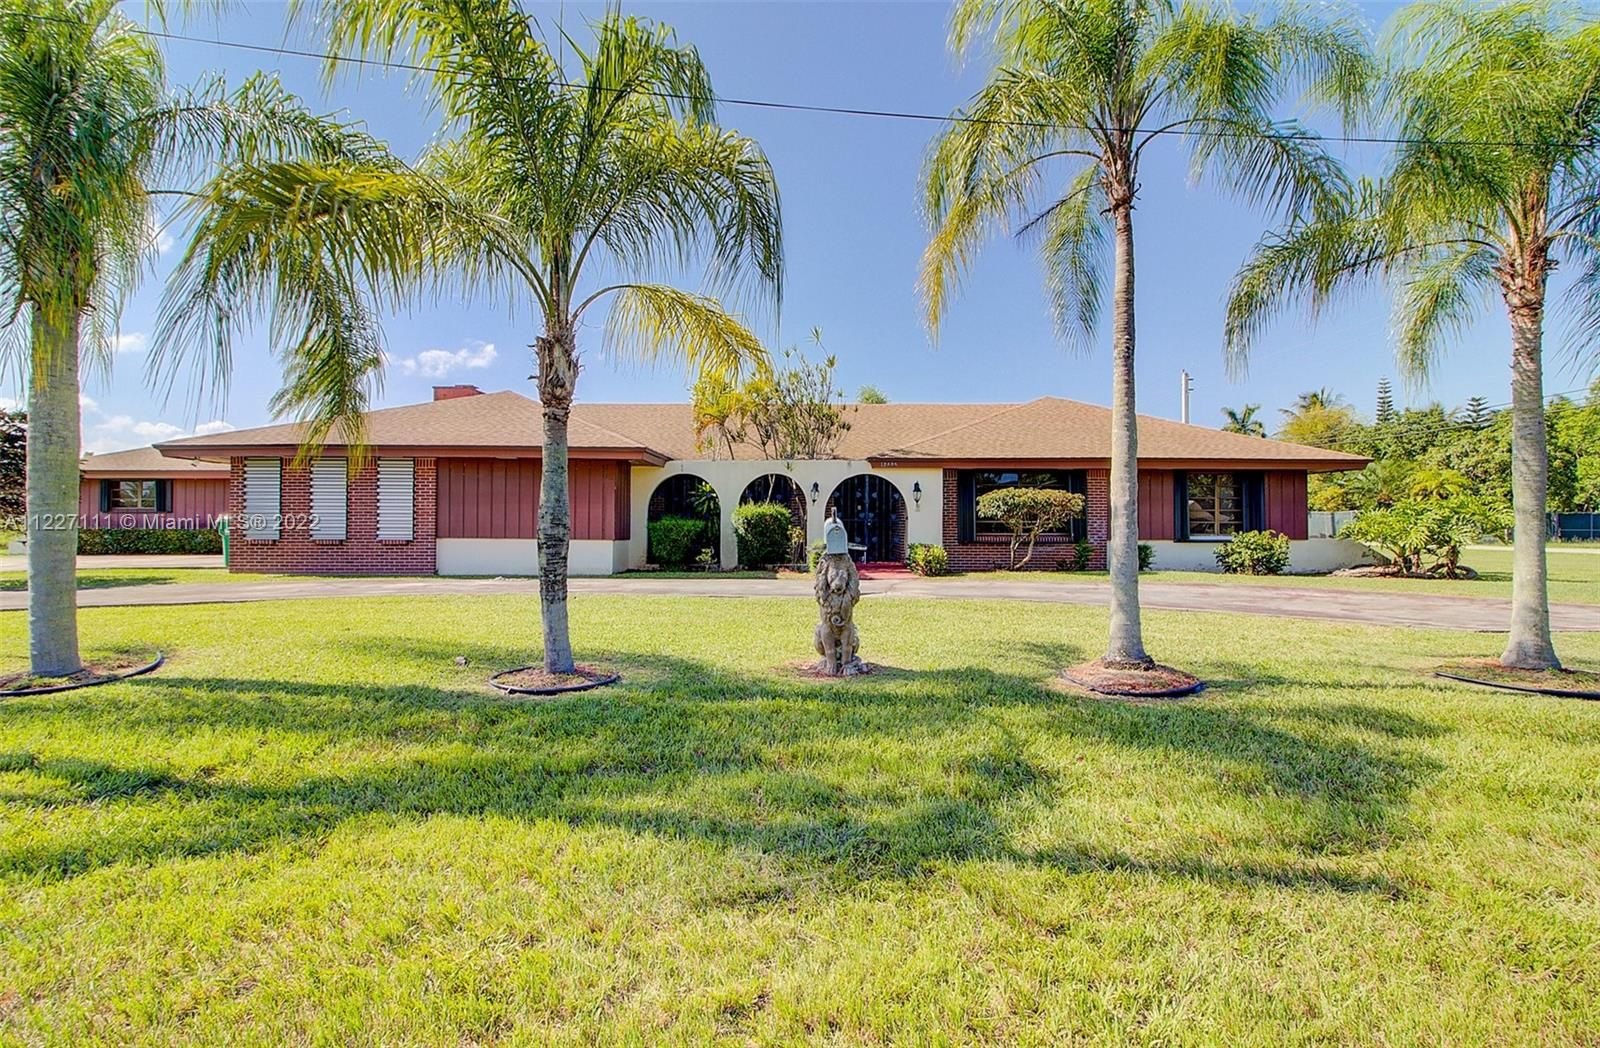 Real estate property located at 12425 226th St, Miami-Dade County, Miami, FL